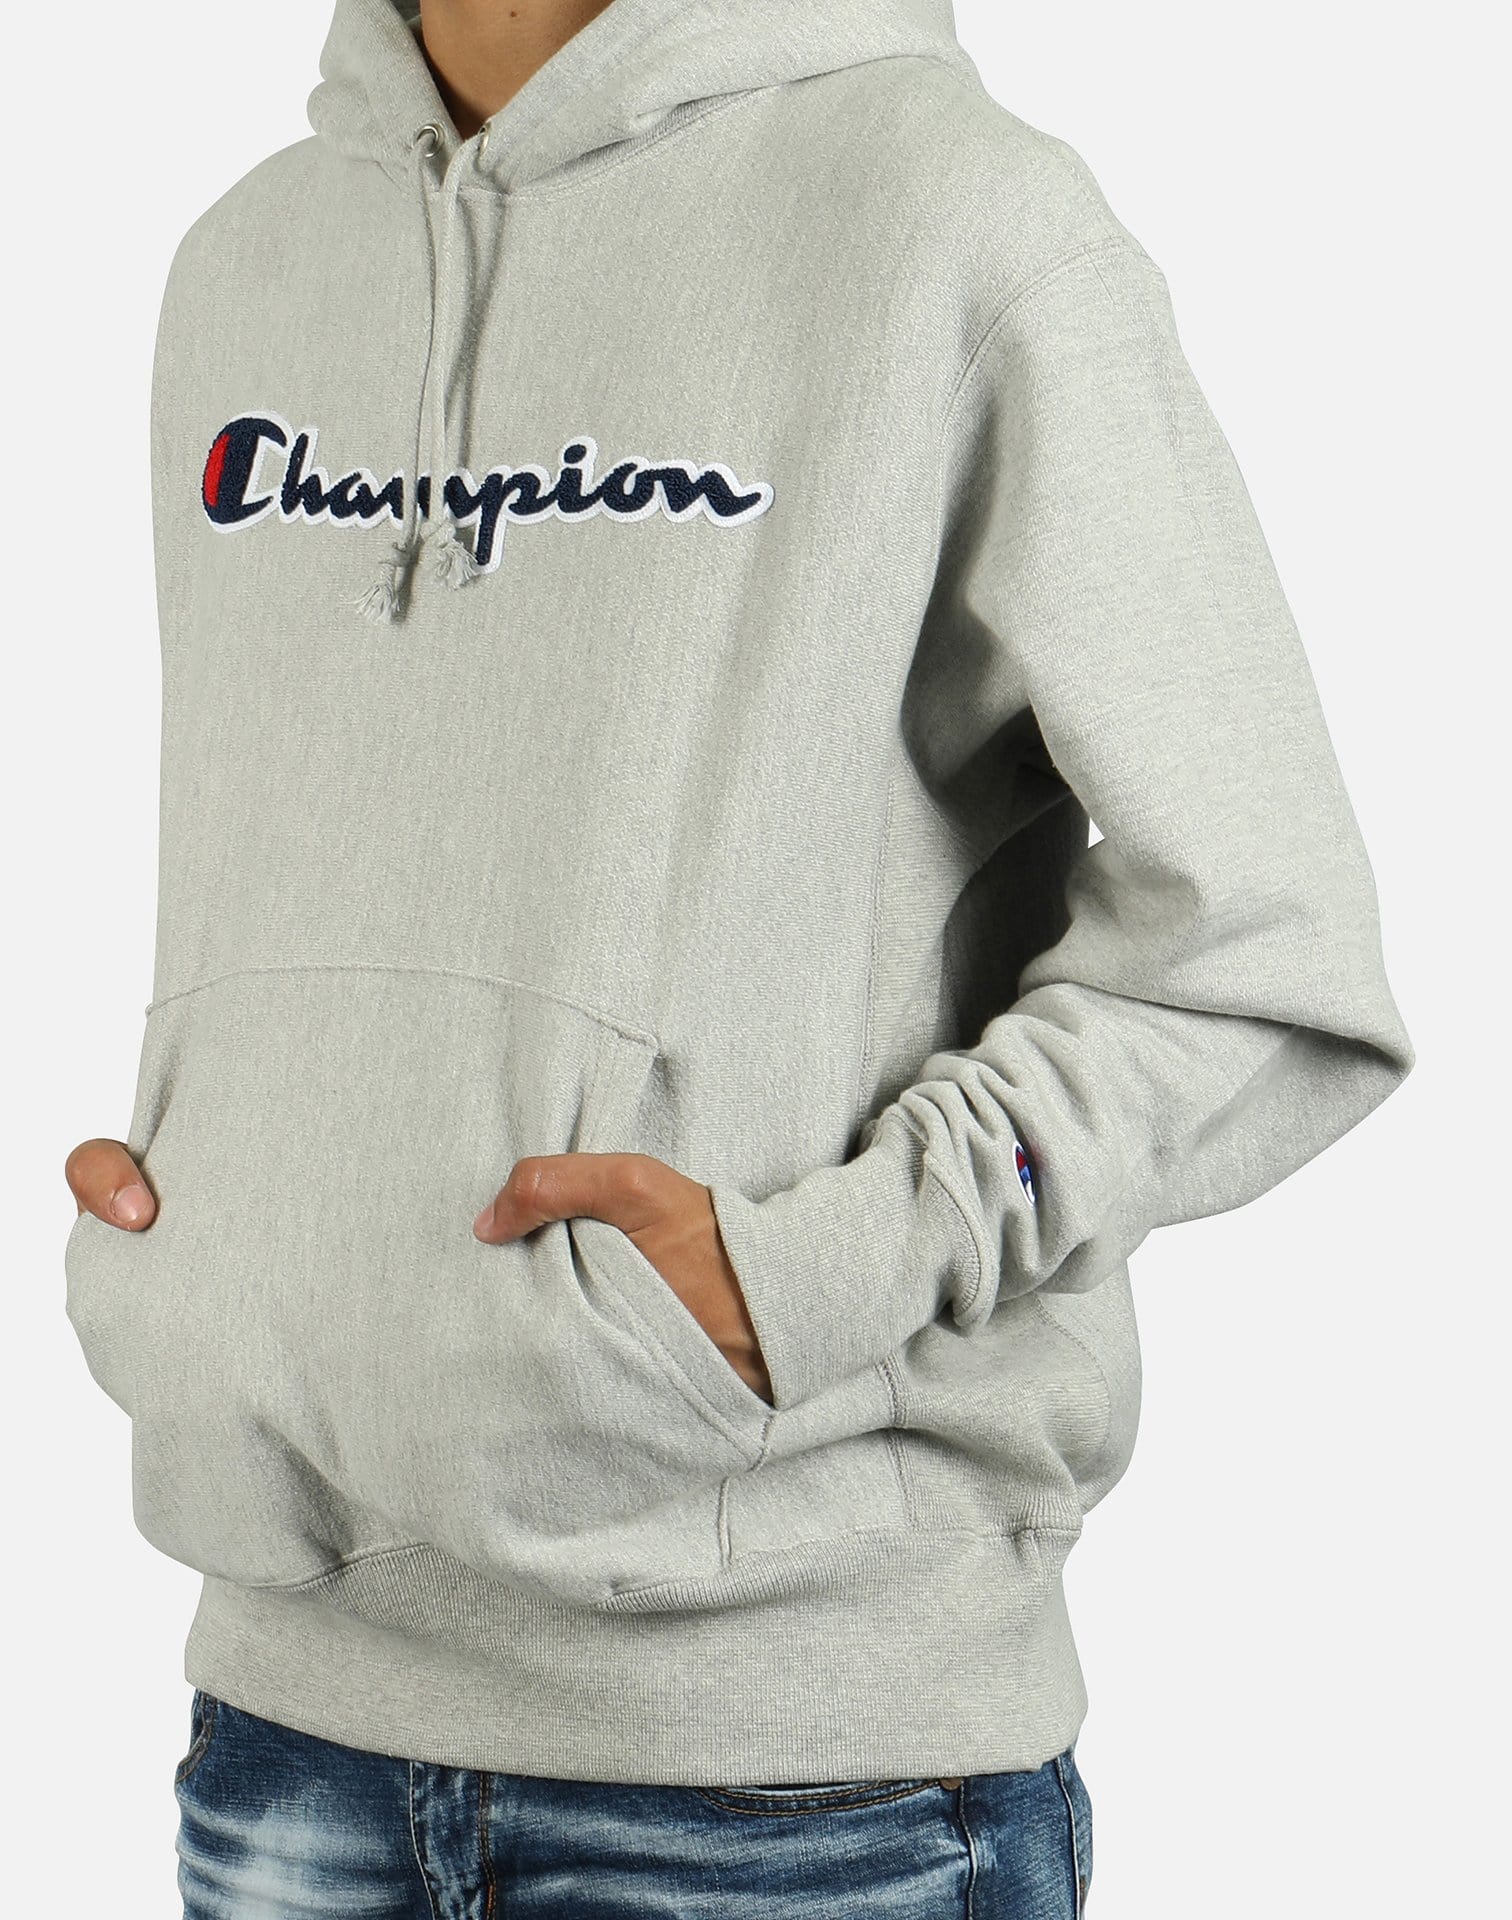 champion reverse weave chain stitch script logo black mens hoodie